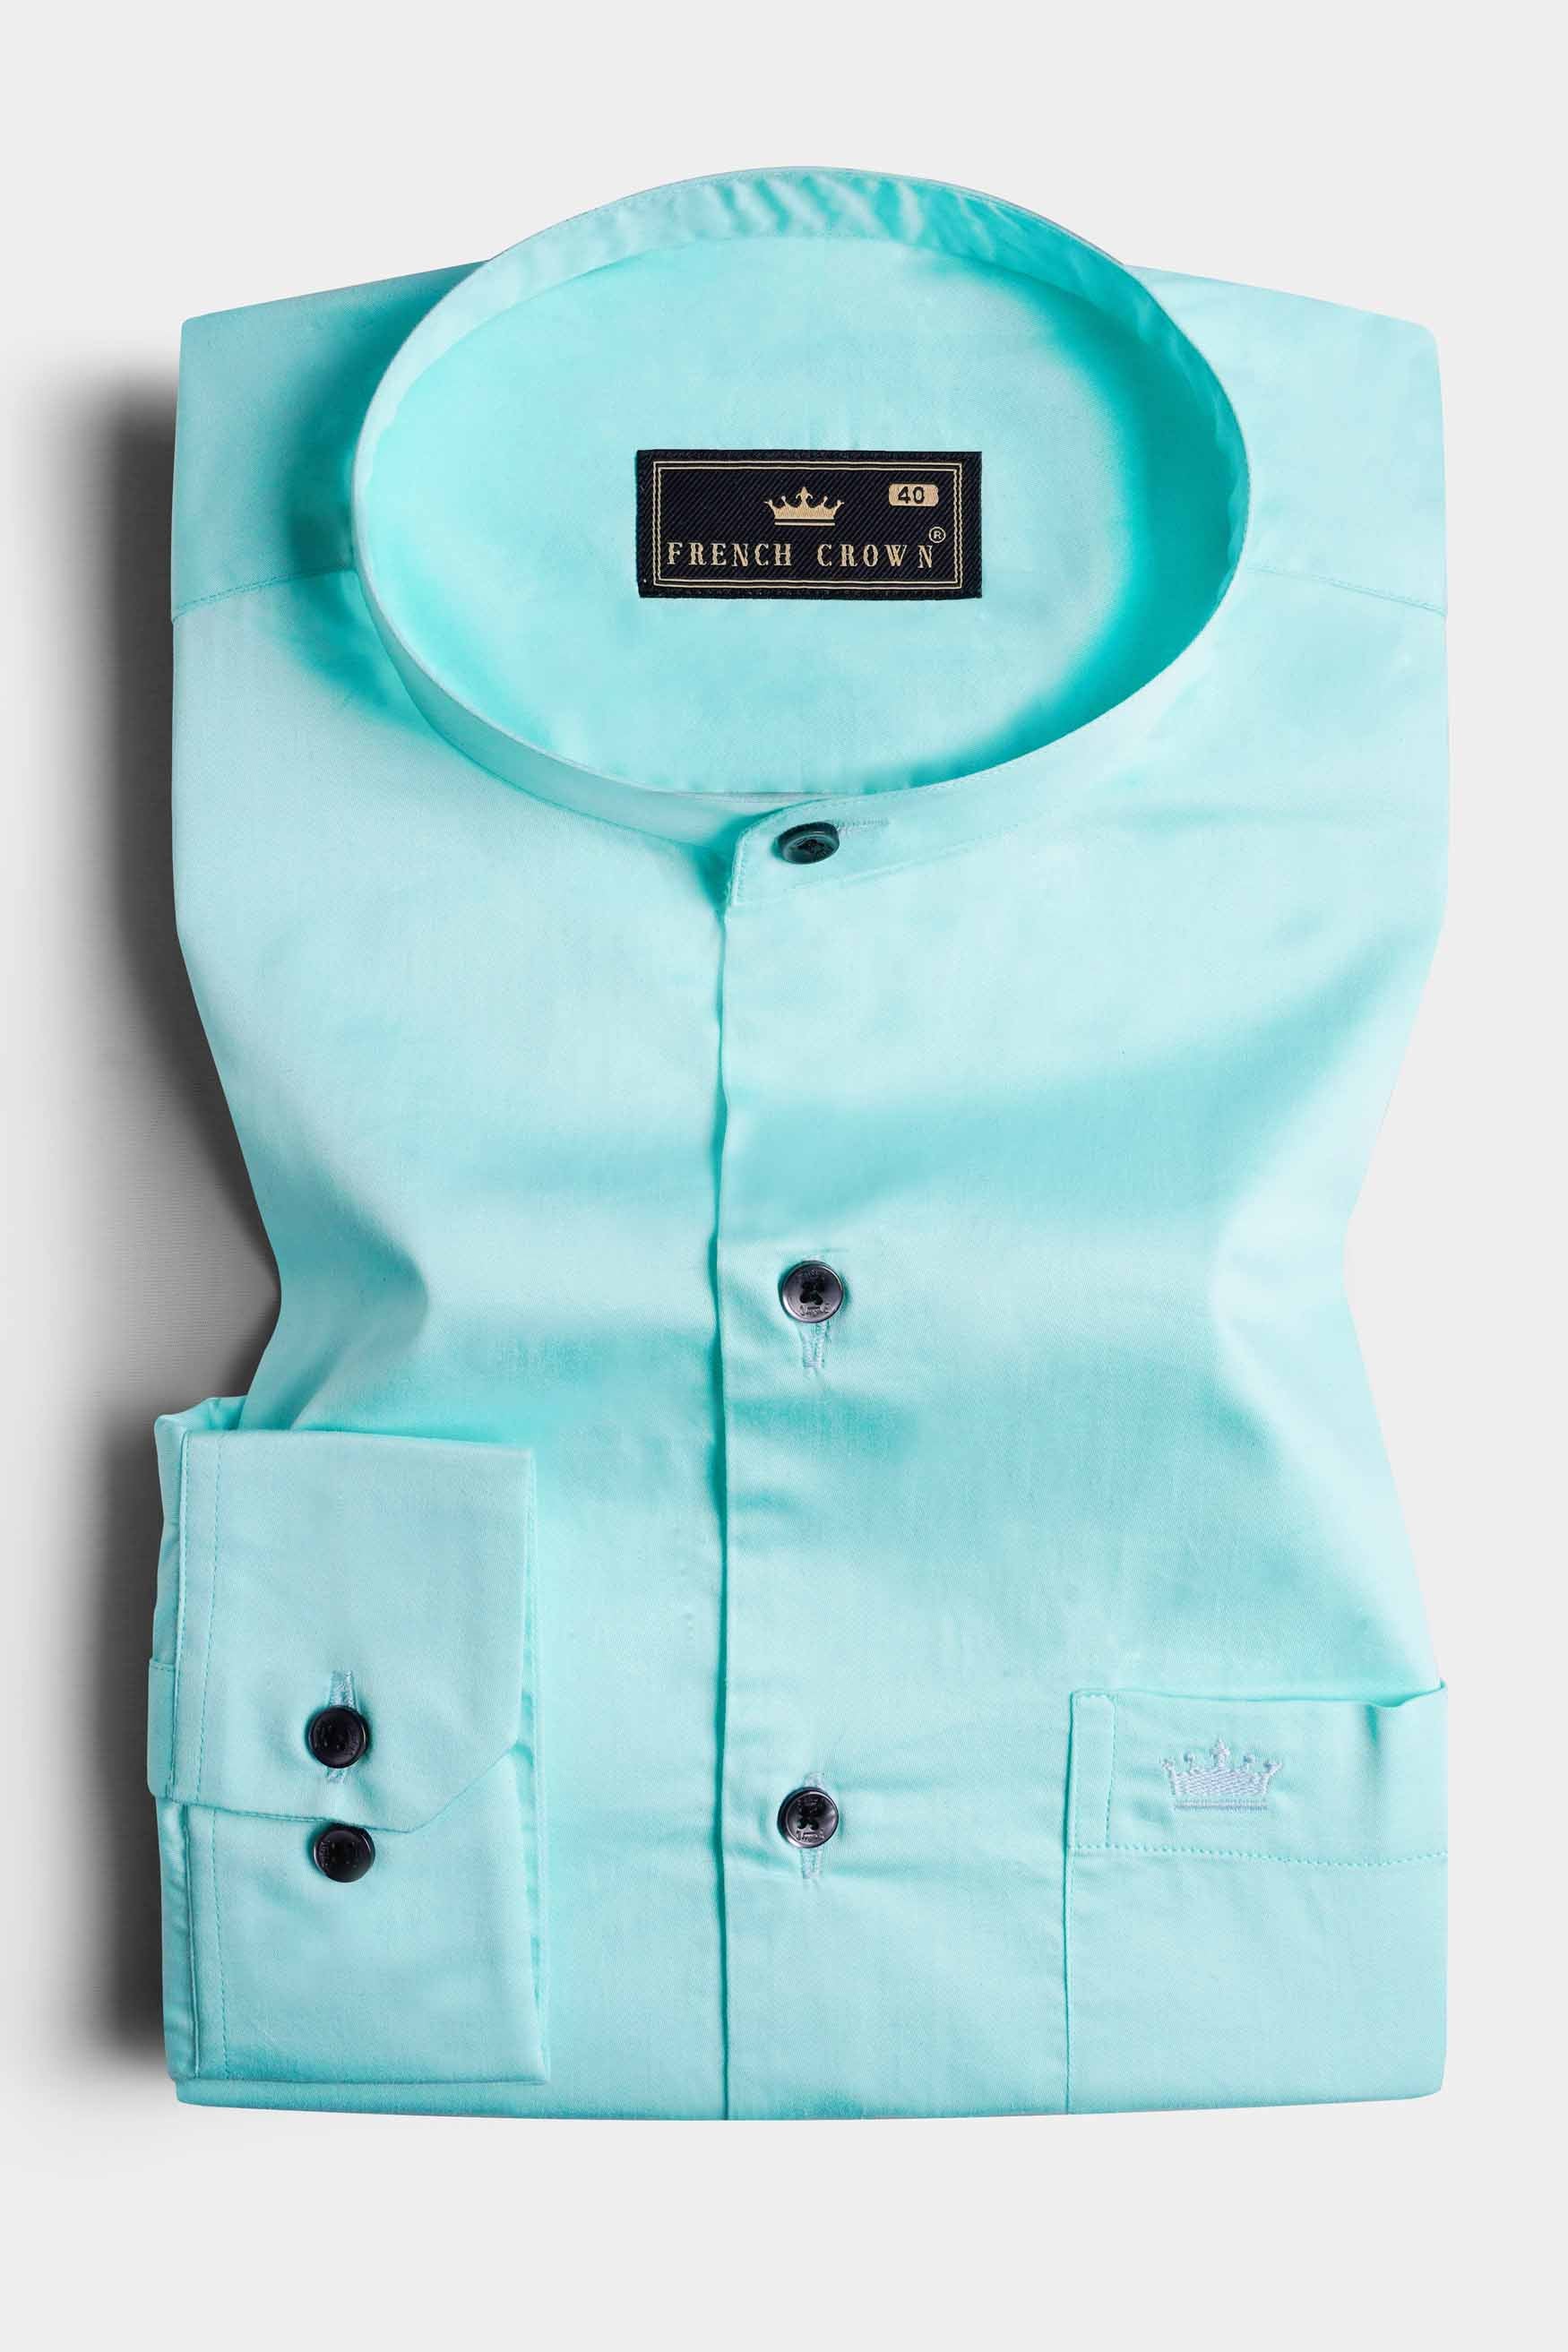 Mizuasagi Blue Subtle Sheen Super Soft Premium Cotton Mandarin Shirt